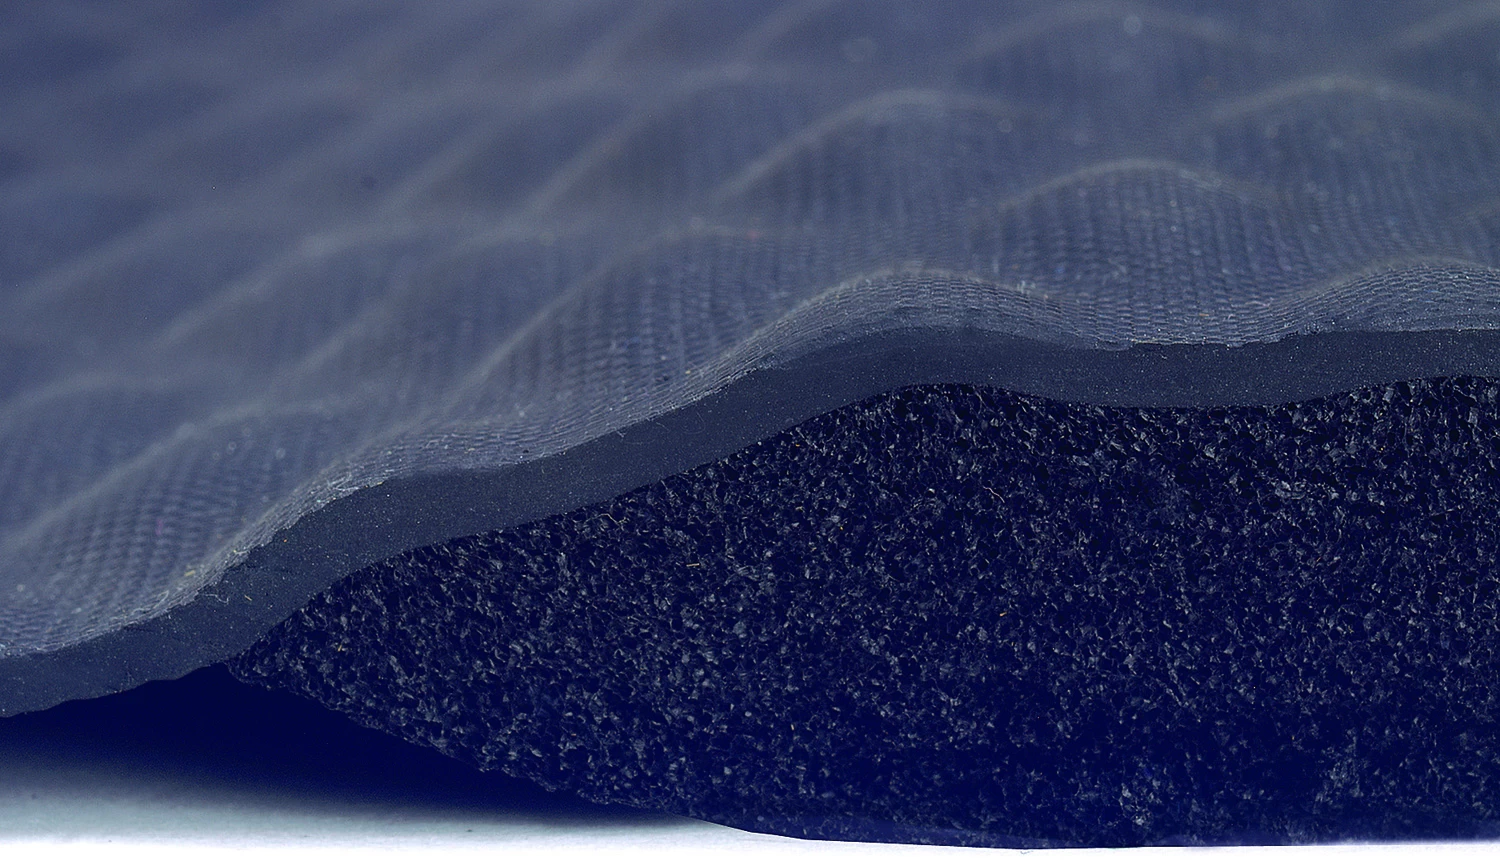 Fashion style waterproof healthy polyurethane custom rubber floor mats shop floor mat floor mat company